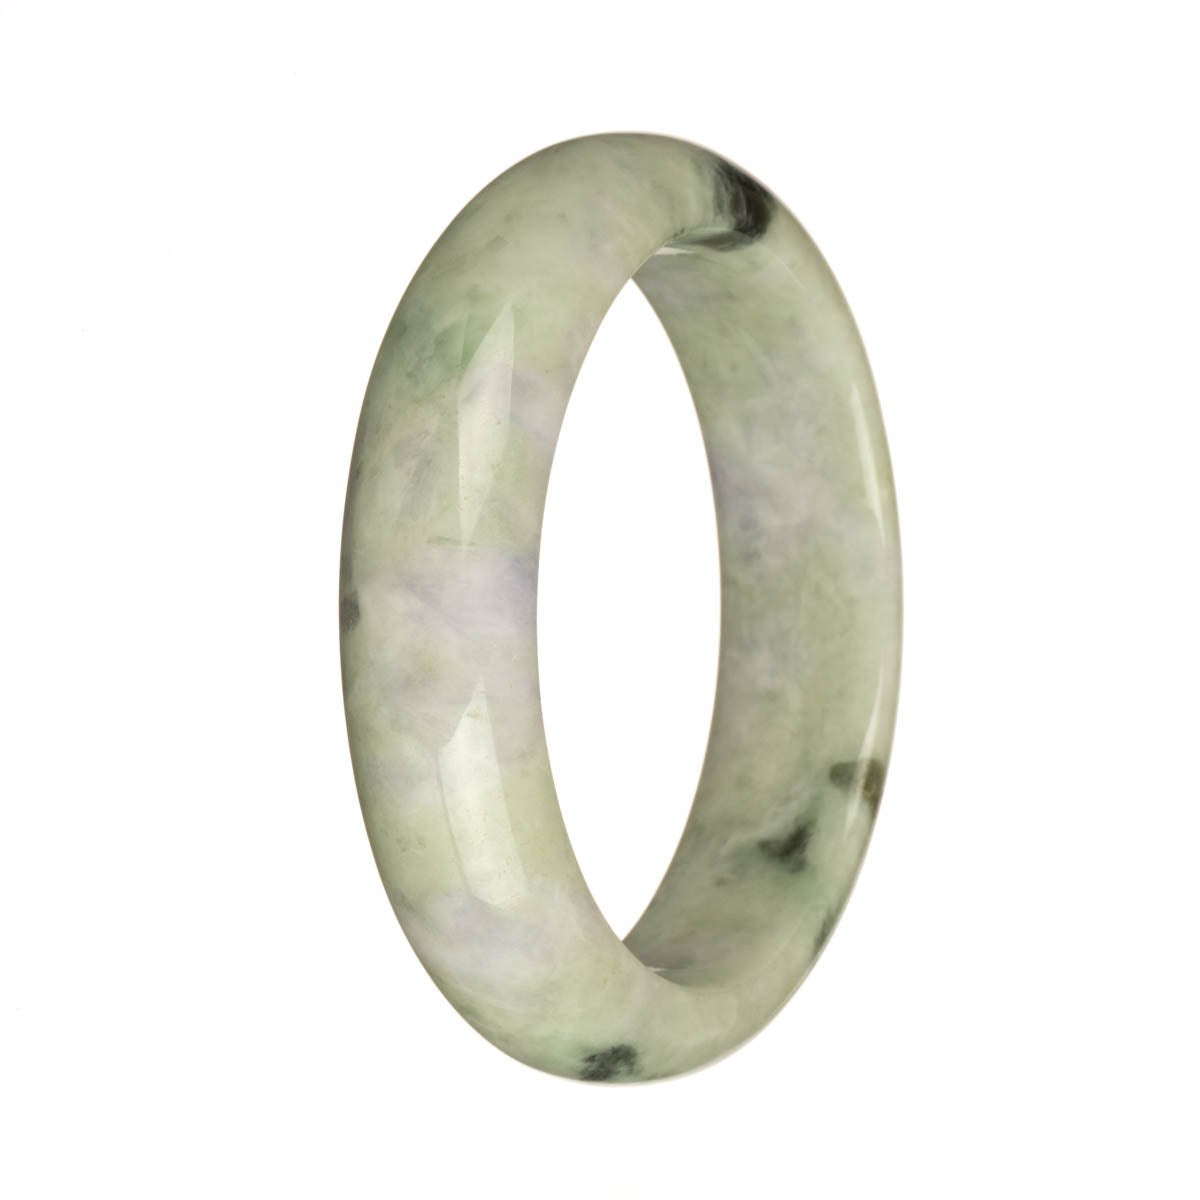 57.8mm Pale Green with Lavender and Olive Green Patterns Jade Bangle Bracelet